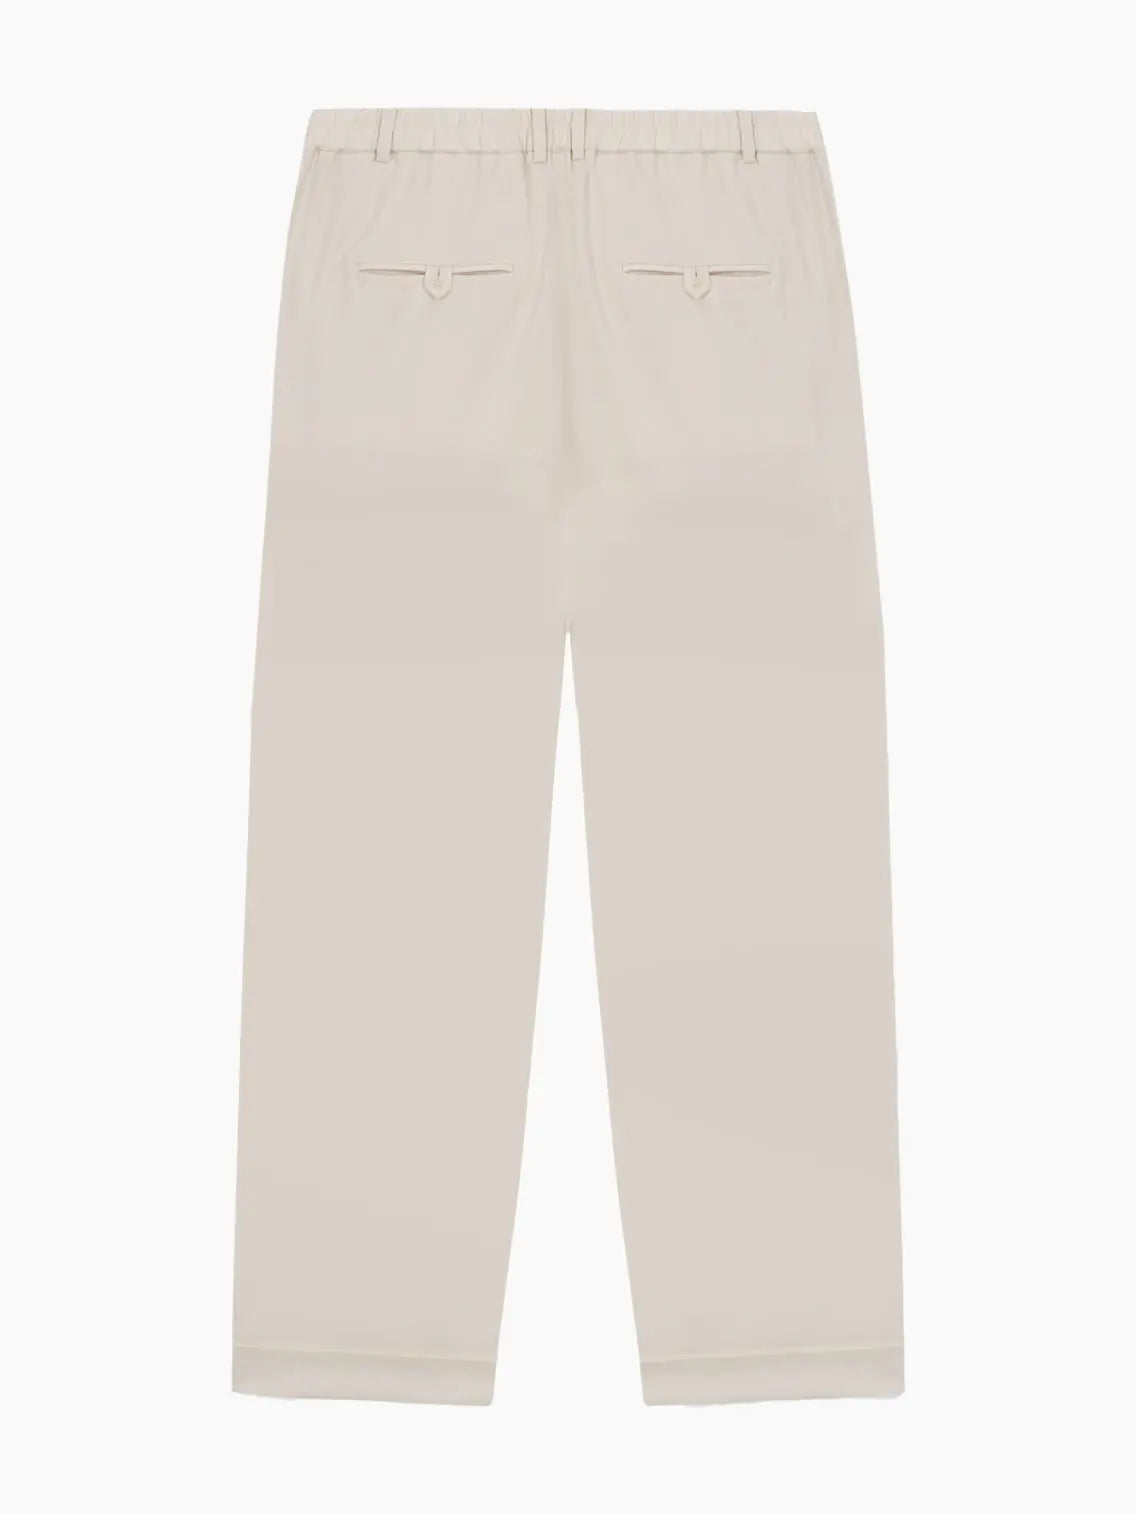 Cordera Cotton & Wool Carrot Pants - Navy